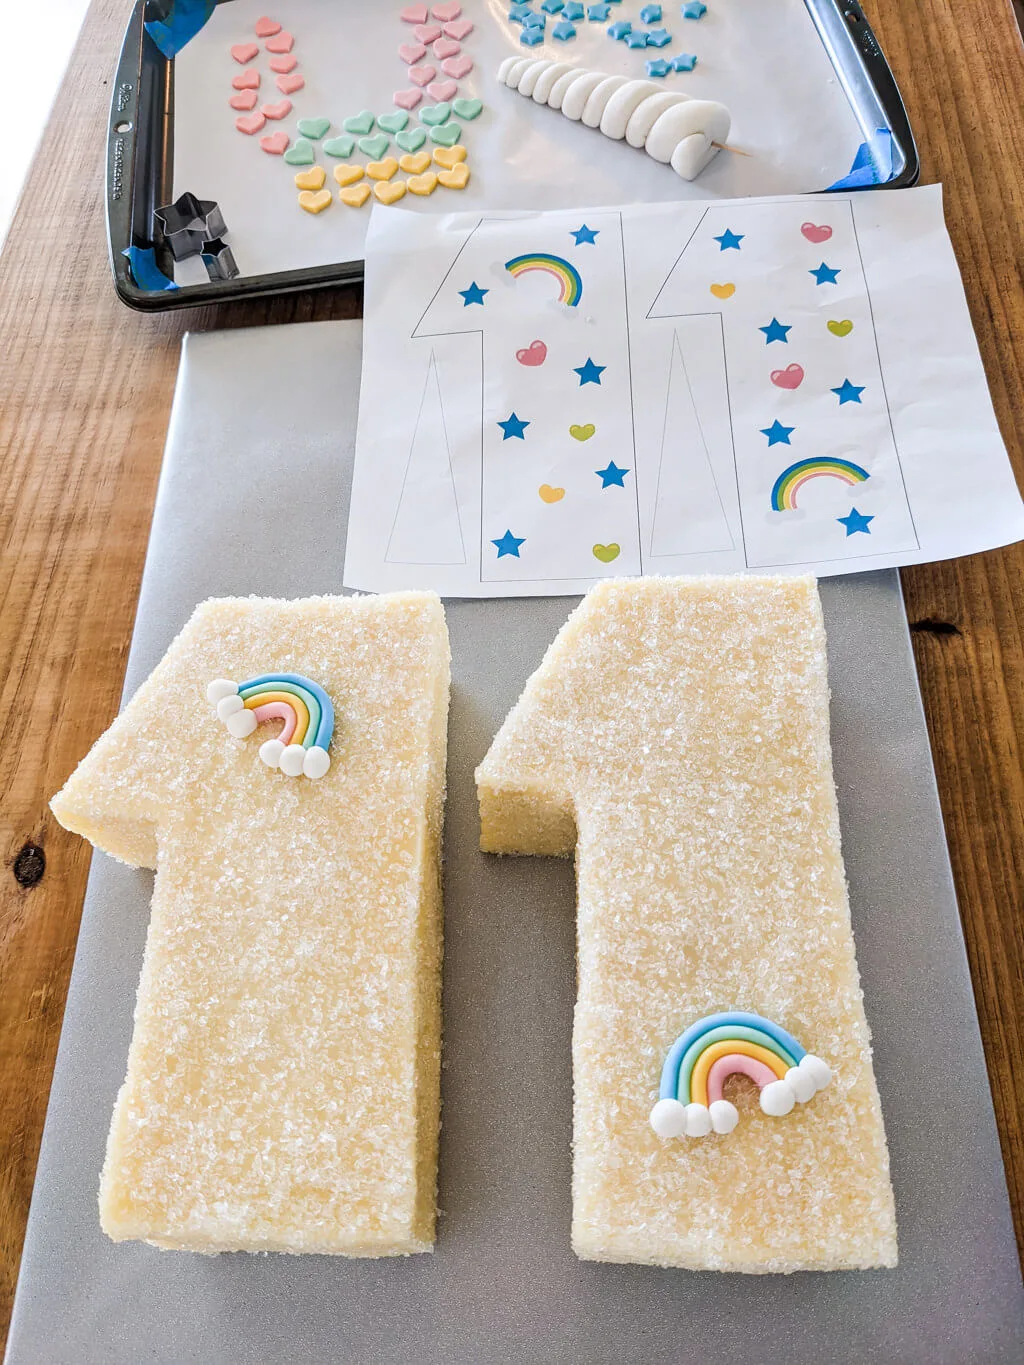 Decorating a birthday cake with fondant rainbows